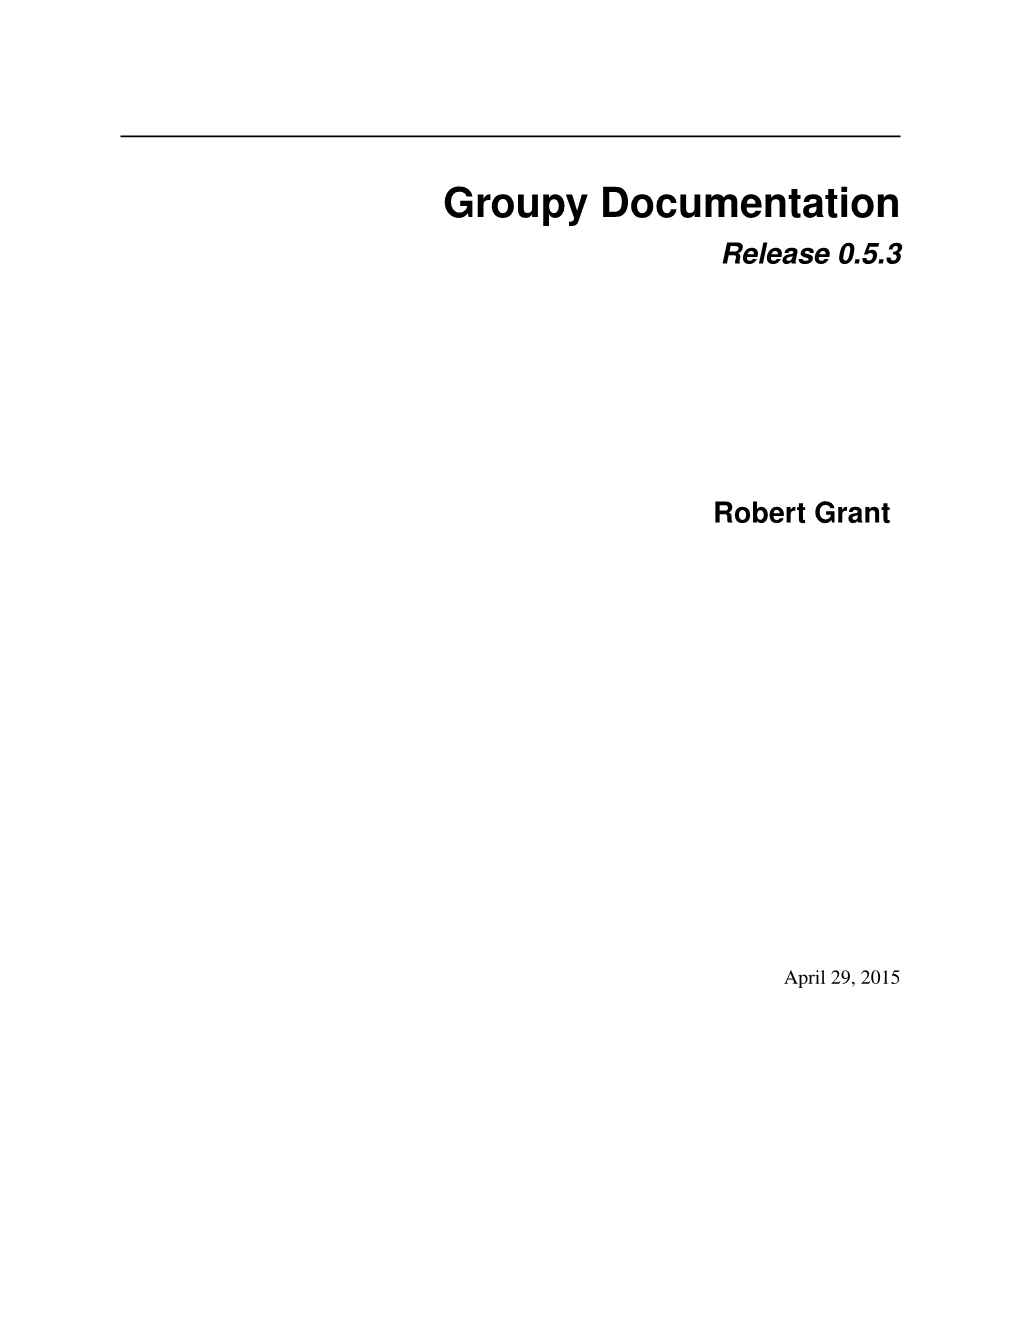 Groupy Documentation Release 0.5.3